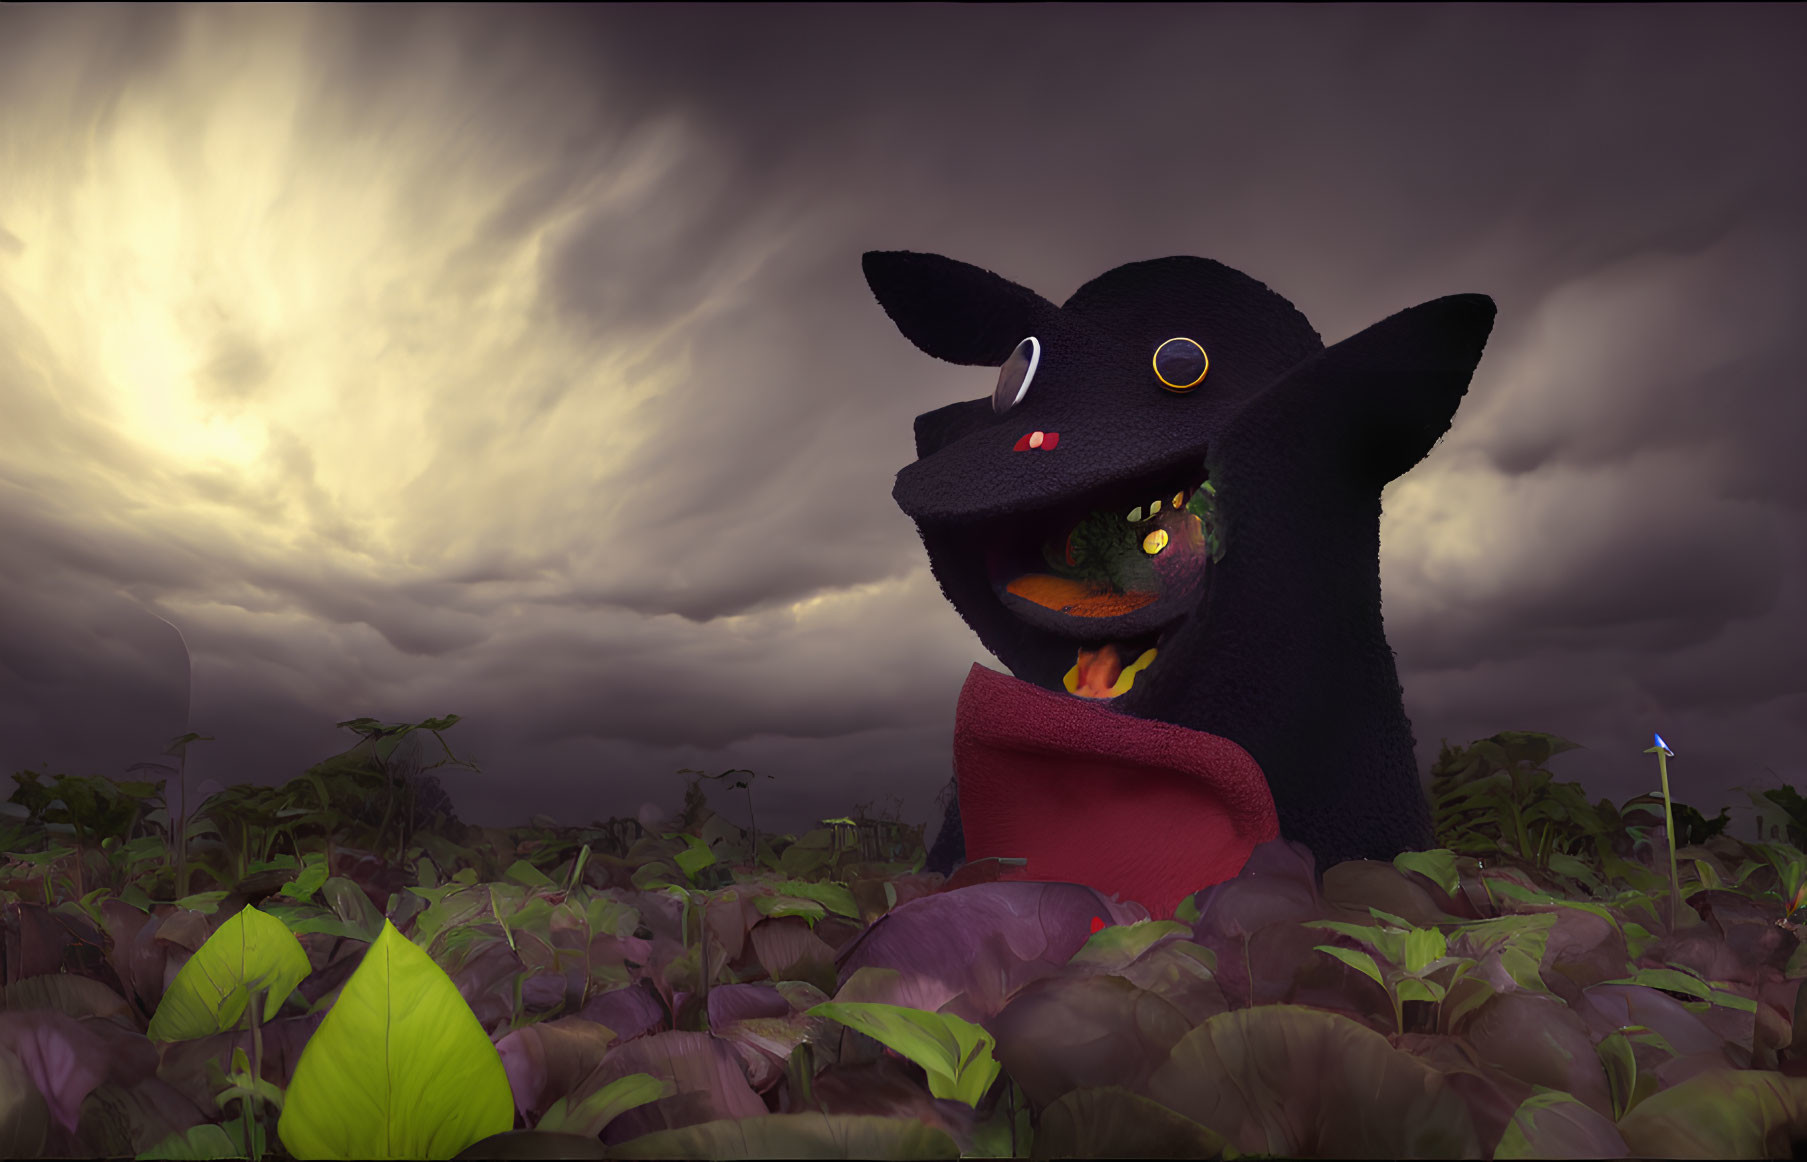 Black Cartoon Creature in Moody Garden with Stormy Sky